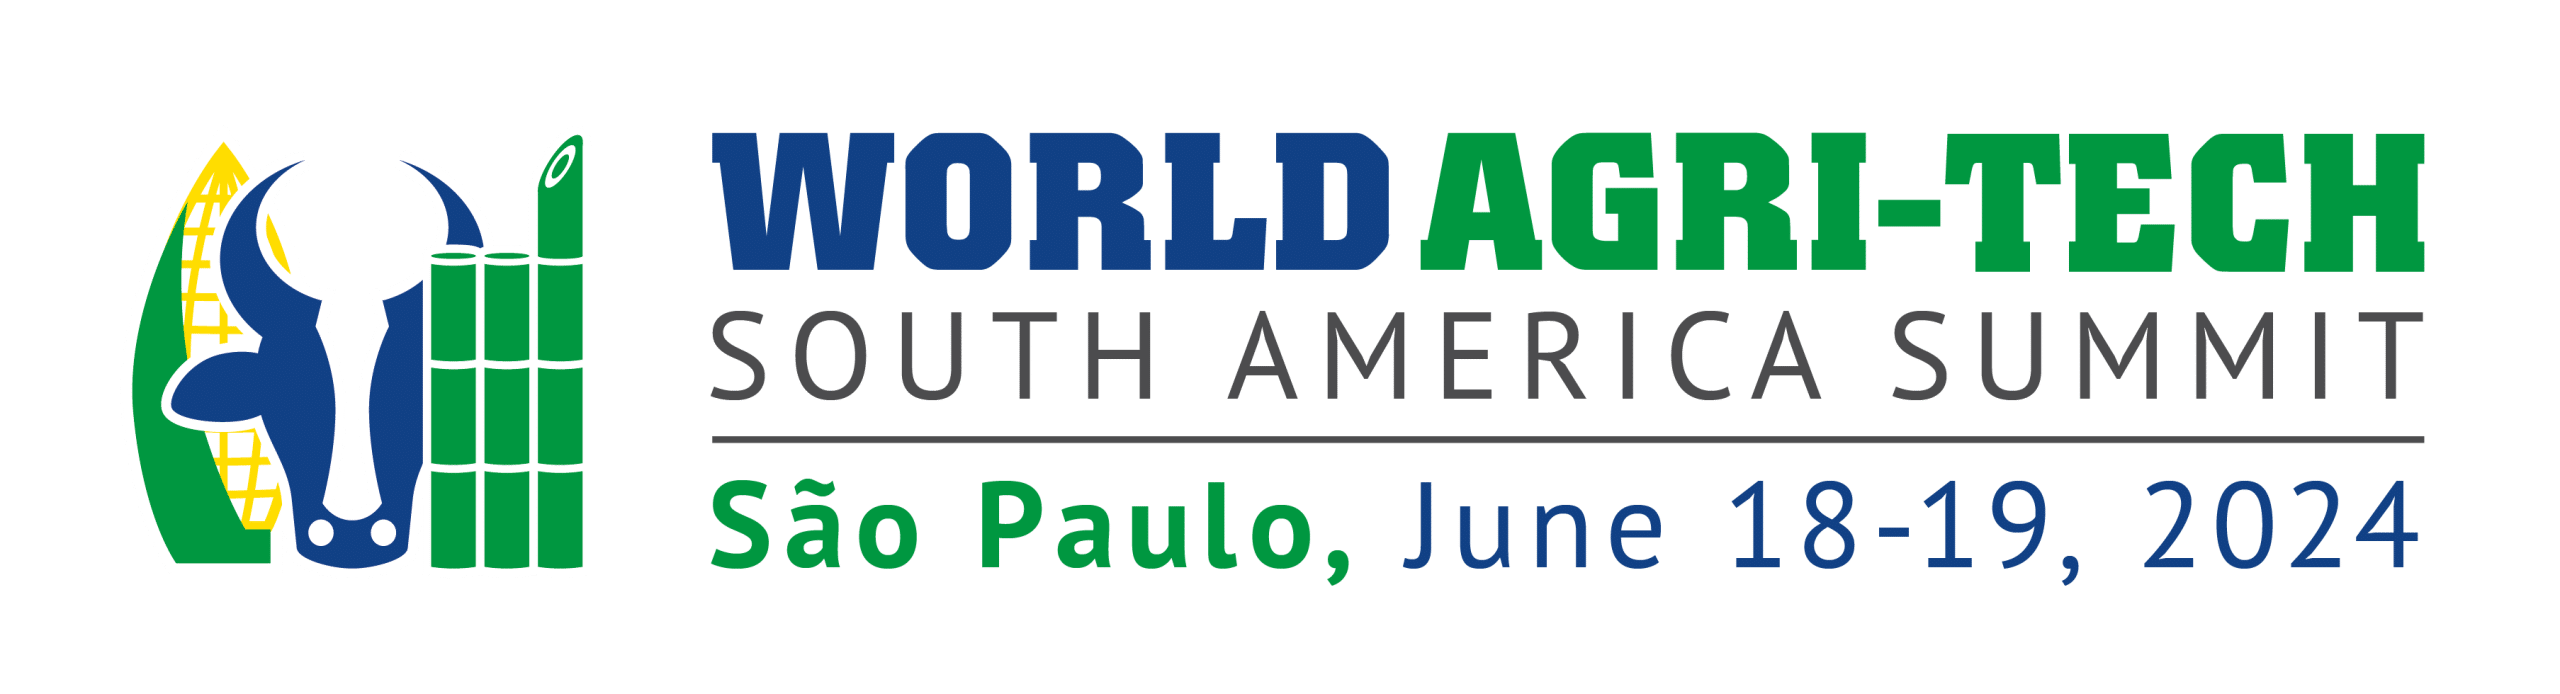 World Agritech South America